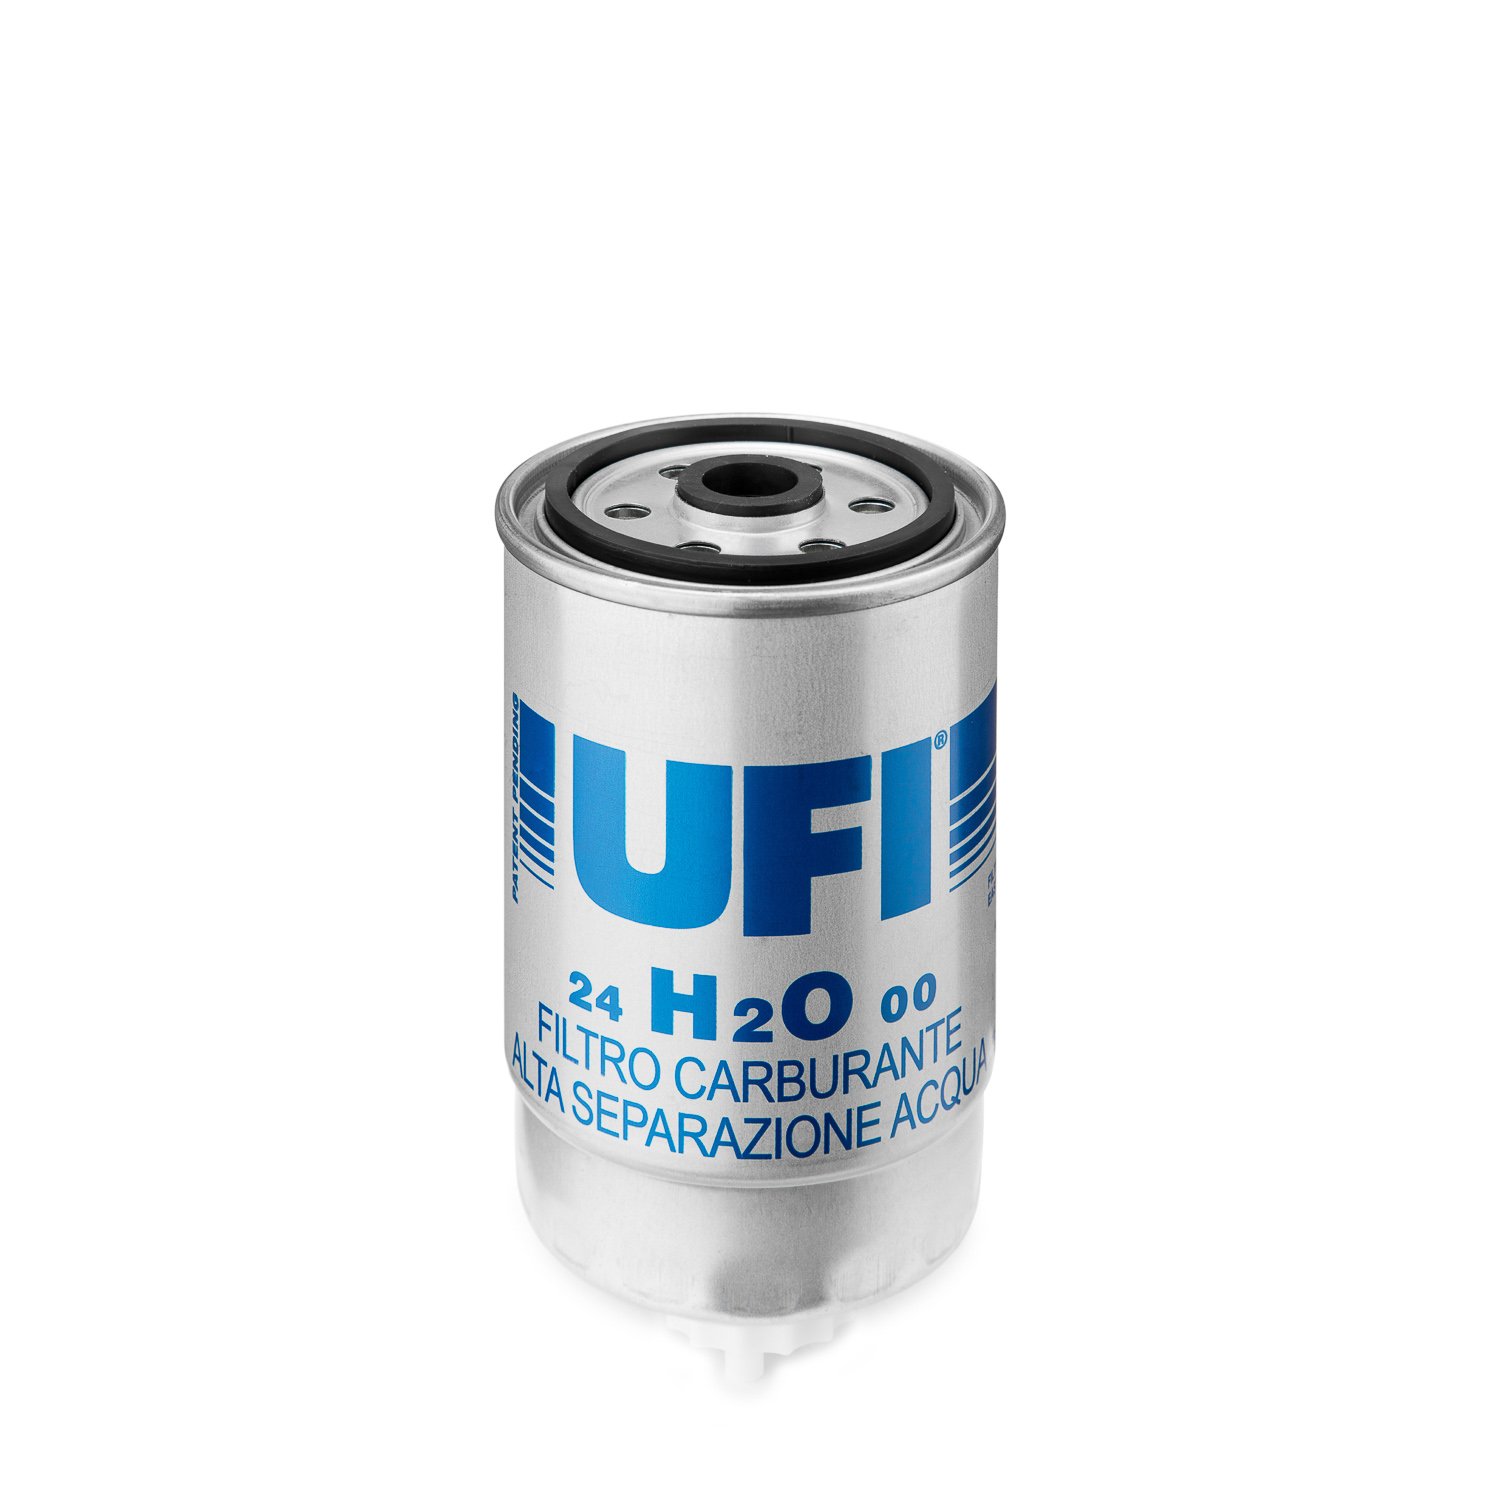 UFI FILTERS Filters 24.H2O.00 Dieselfilter von UFI